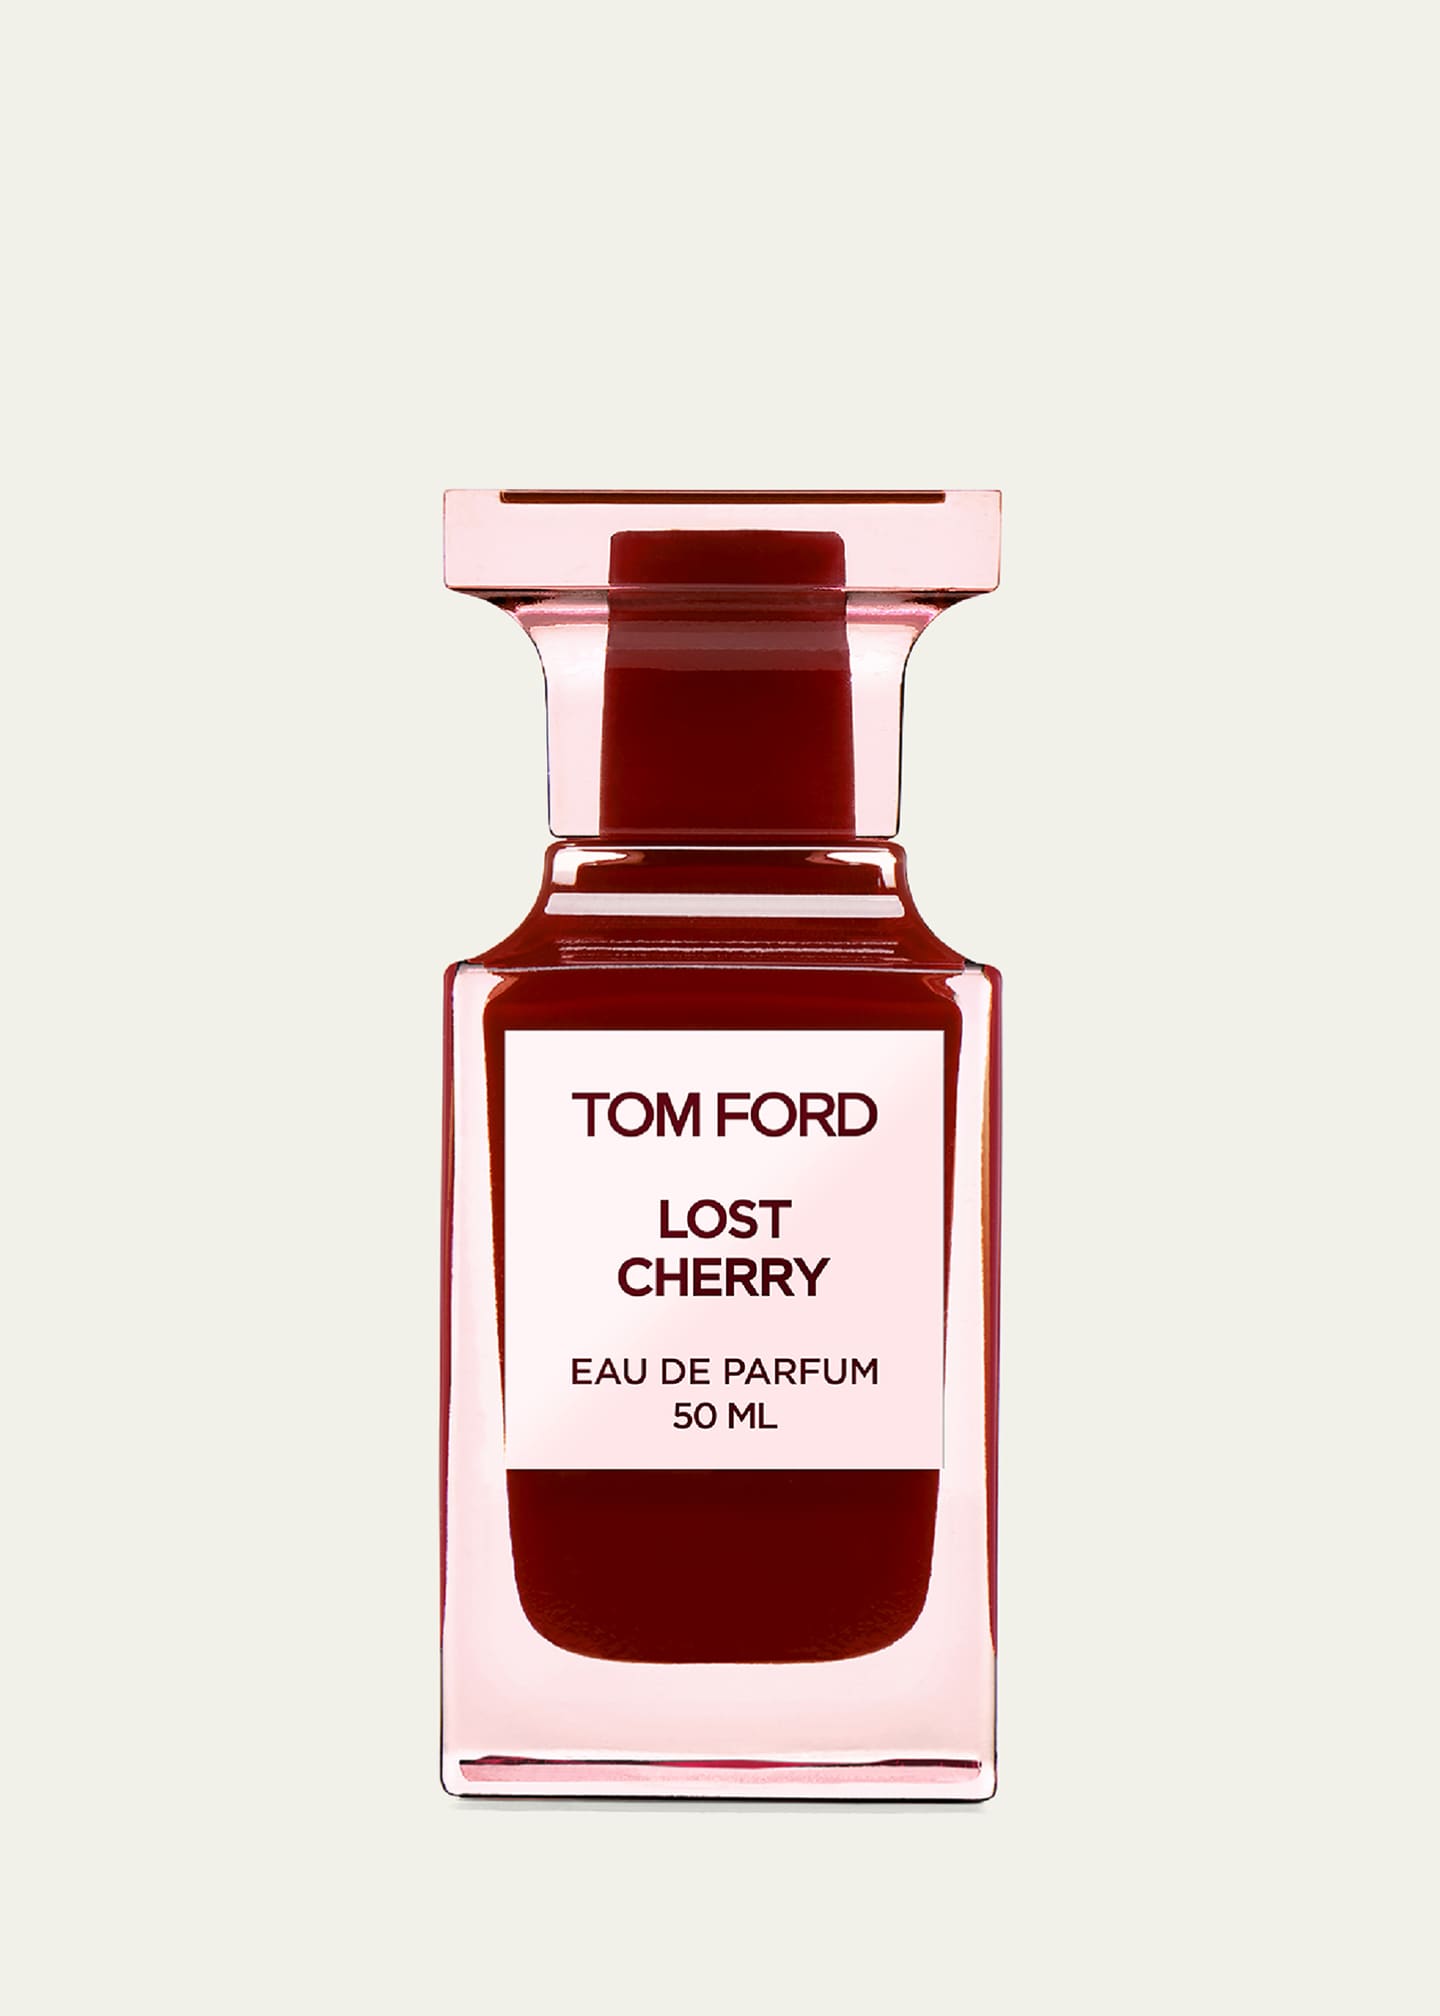 TOM FORD Lost Cherry Eau de Parfum Fragrance, 1.7 oz Image 1 of 3